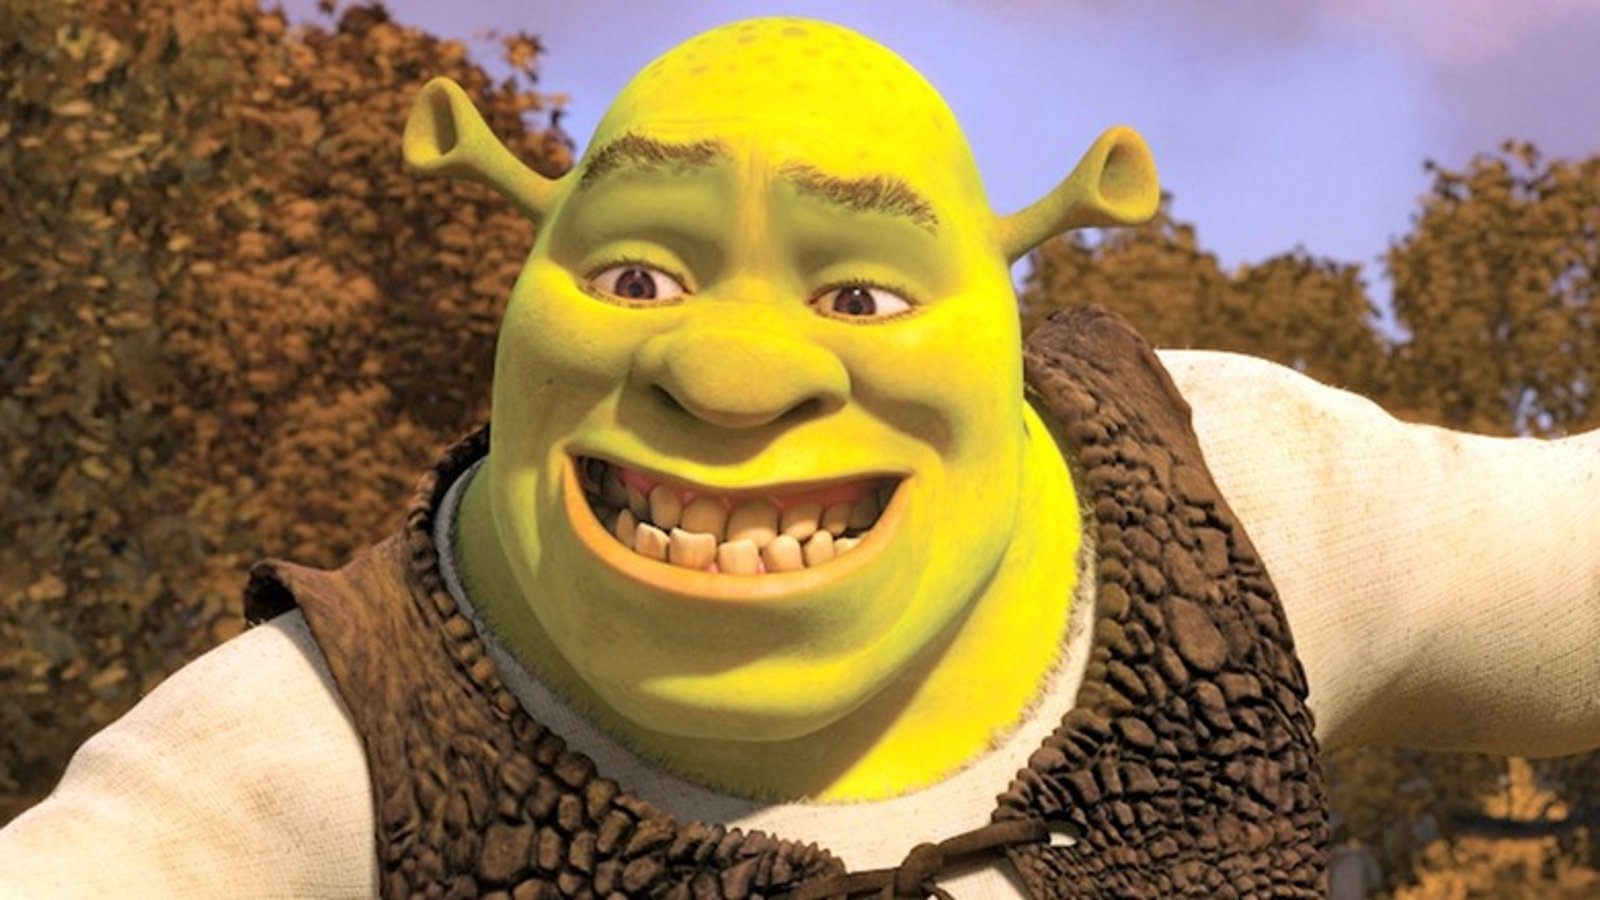 Download Shrek Meme Wallpaper